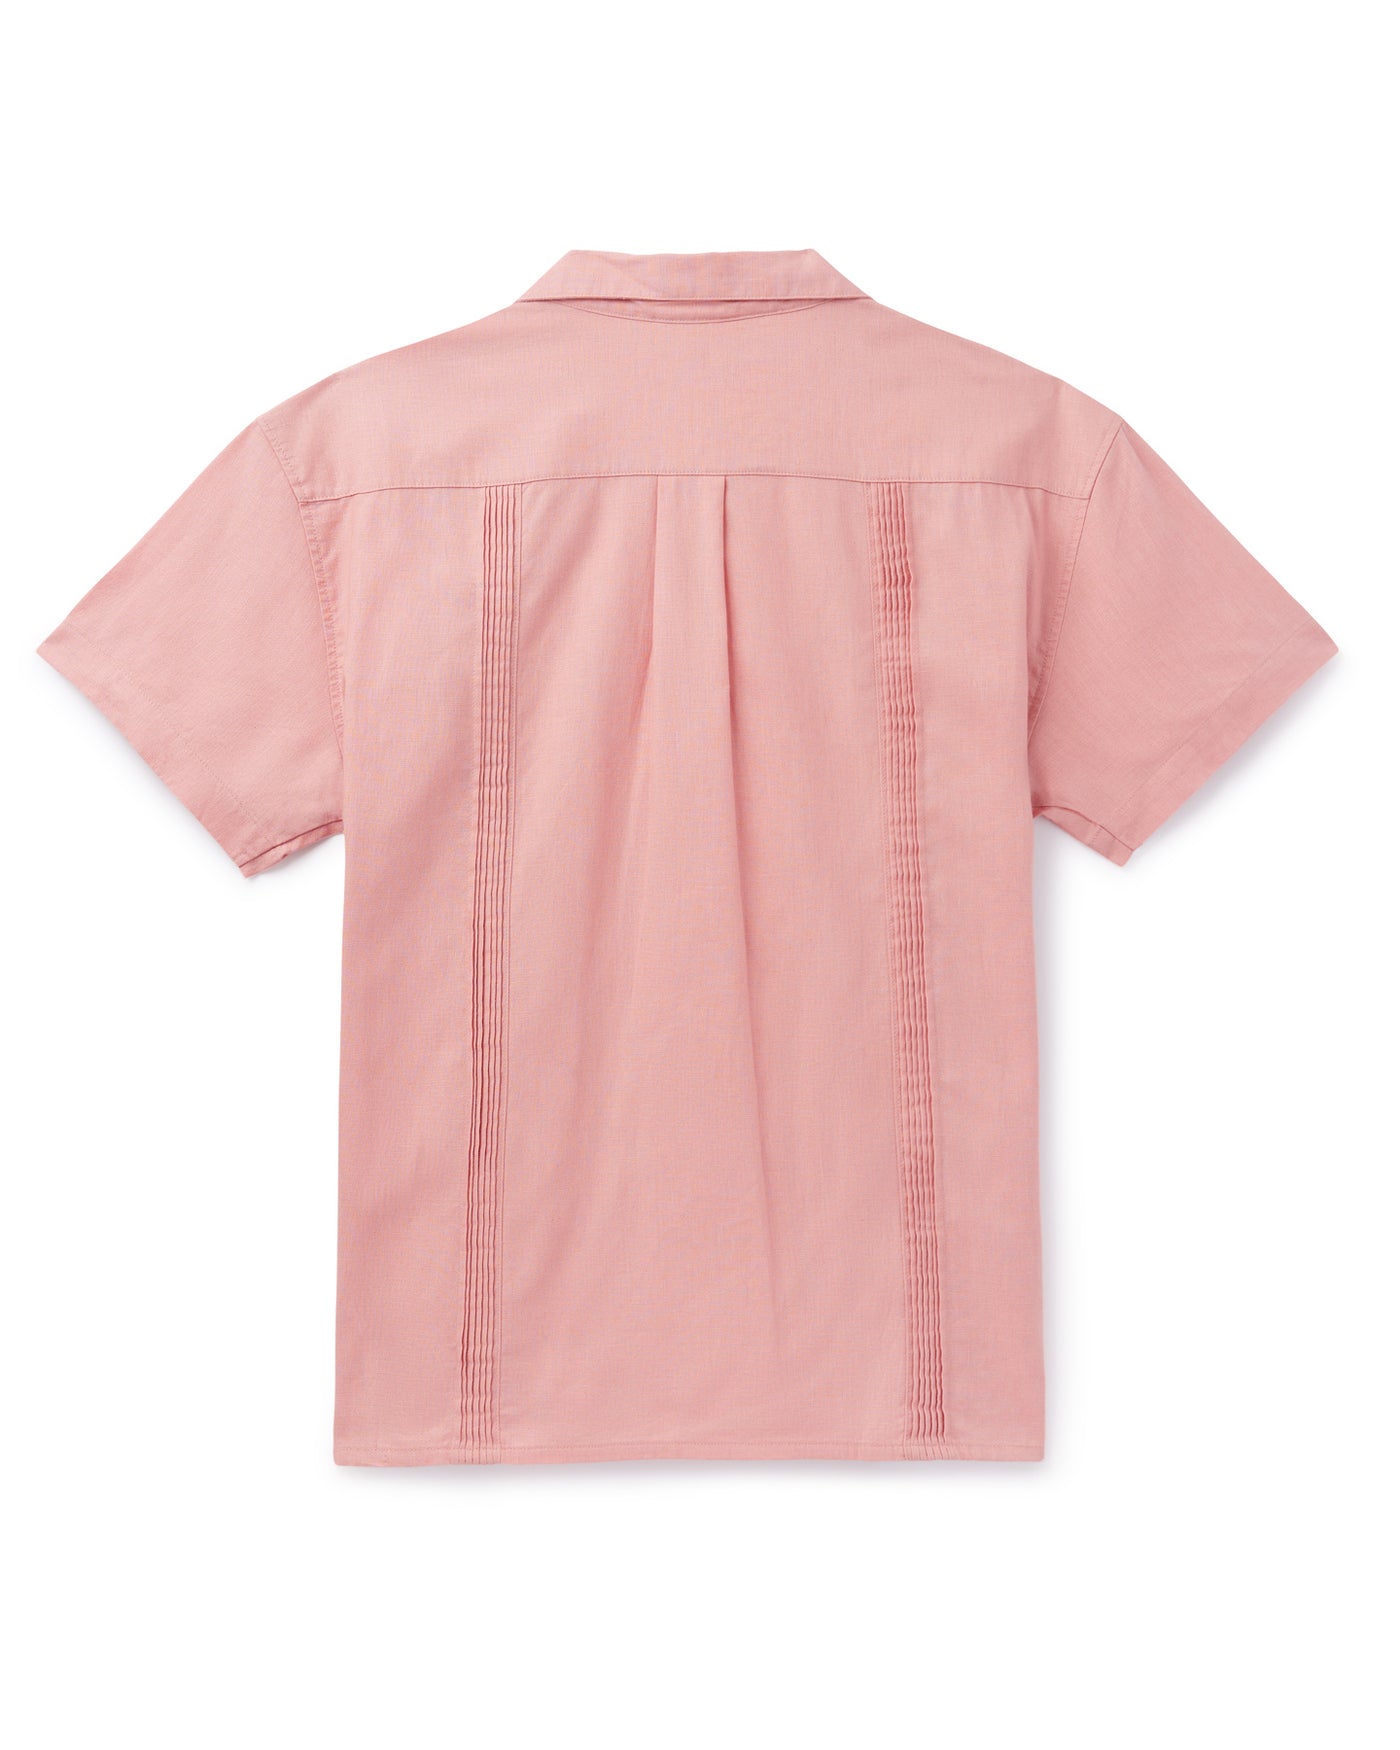 The Brisa Linen Shirt - Spanish Rose